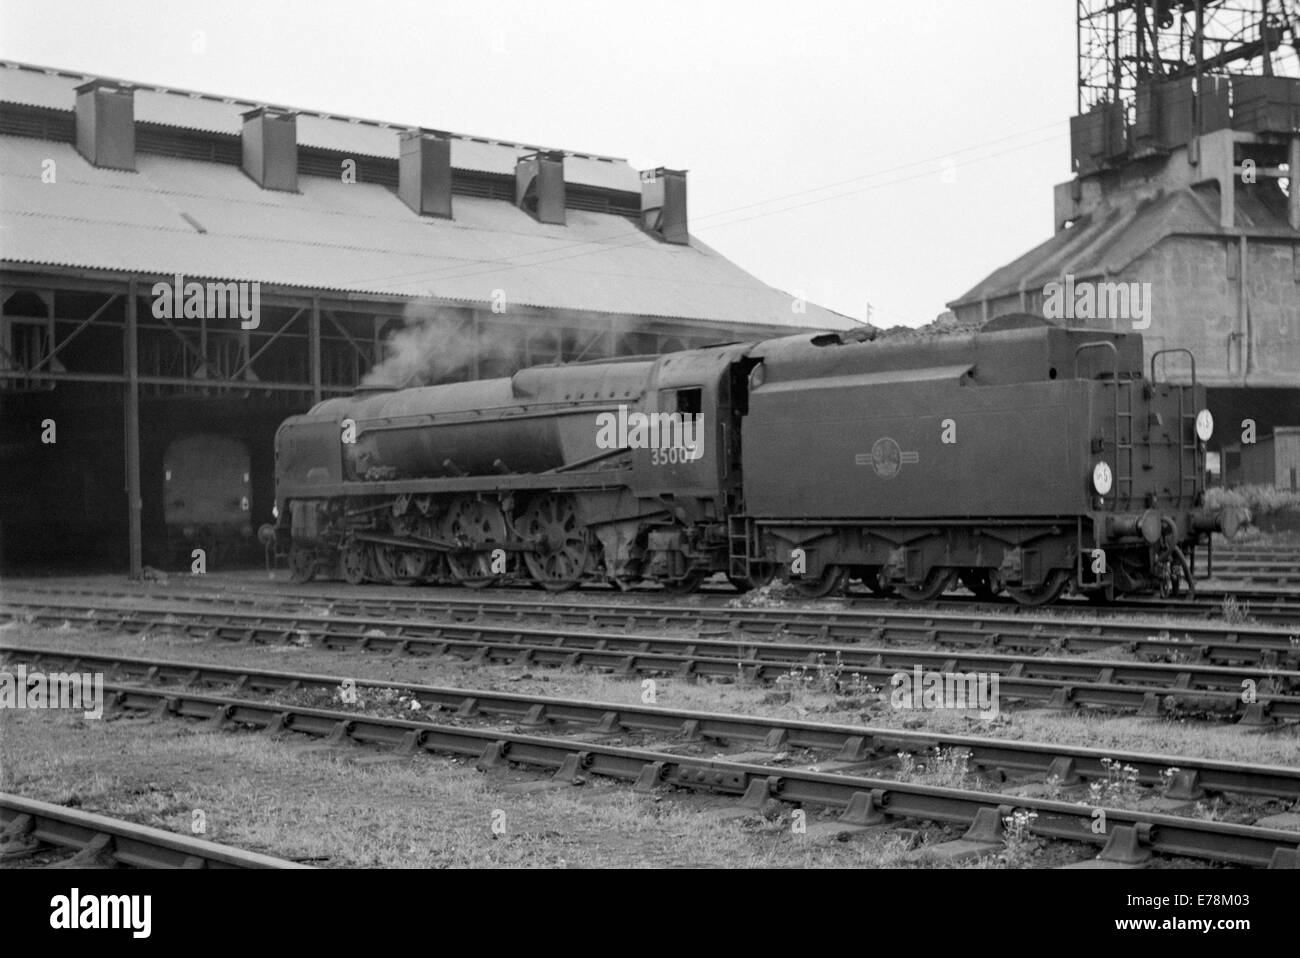 original steam train merchant navy class 35007 aberdeen commonwealth operating on british railways during the 1960s Stock Photo